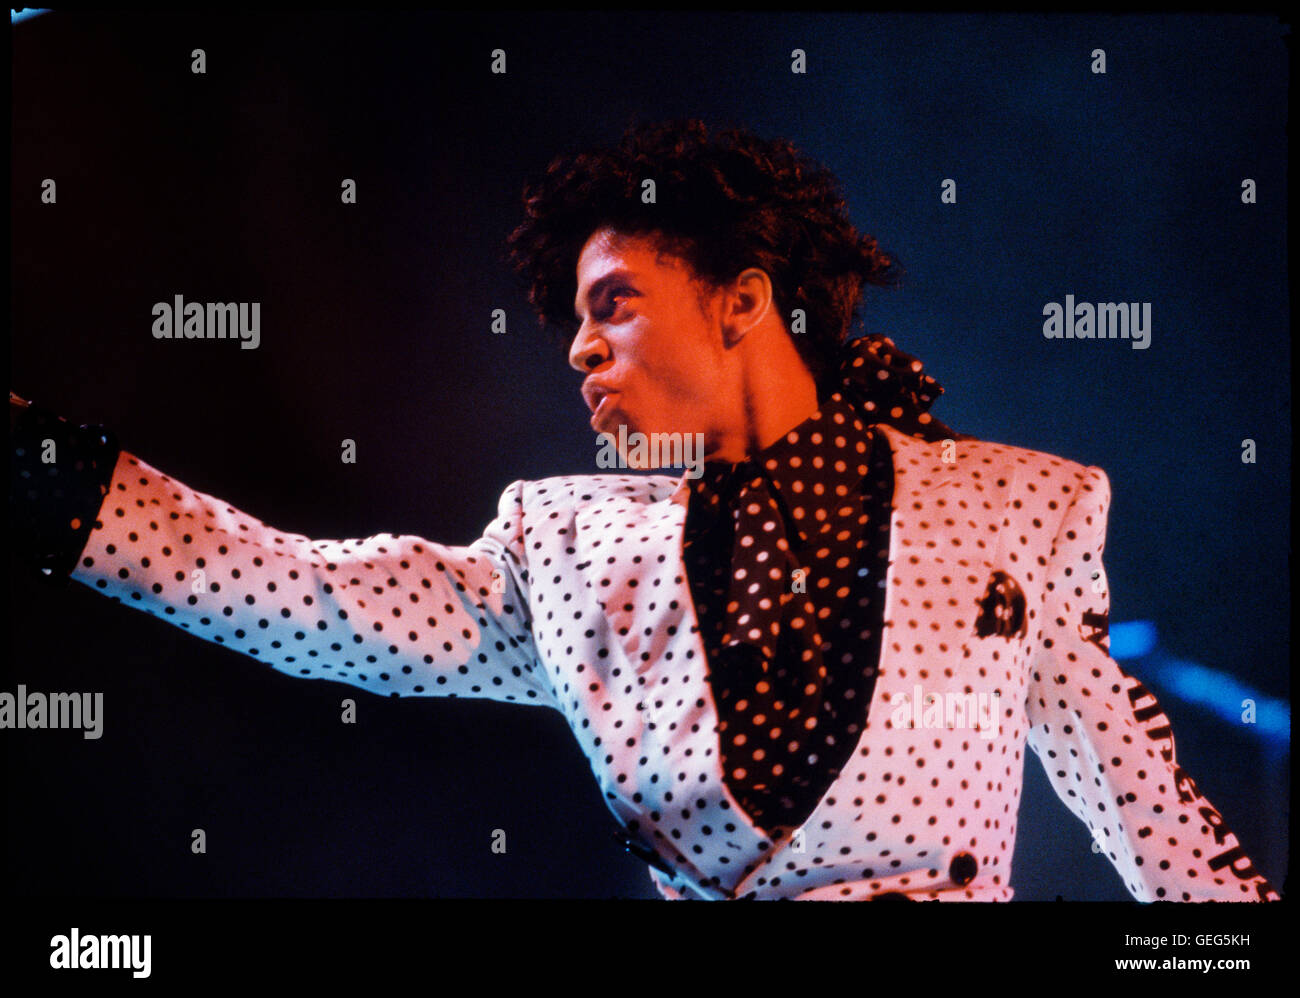 Prince photographed at The Oakland Coliseum in Oakland, CA November 10, 1988© Jay Blakesberg /MediaPunch Stock Photo